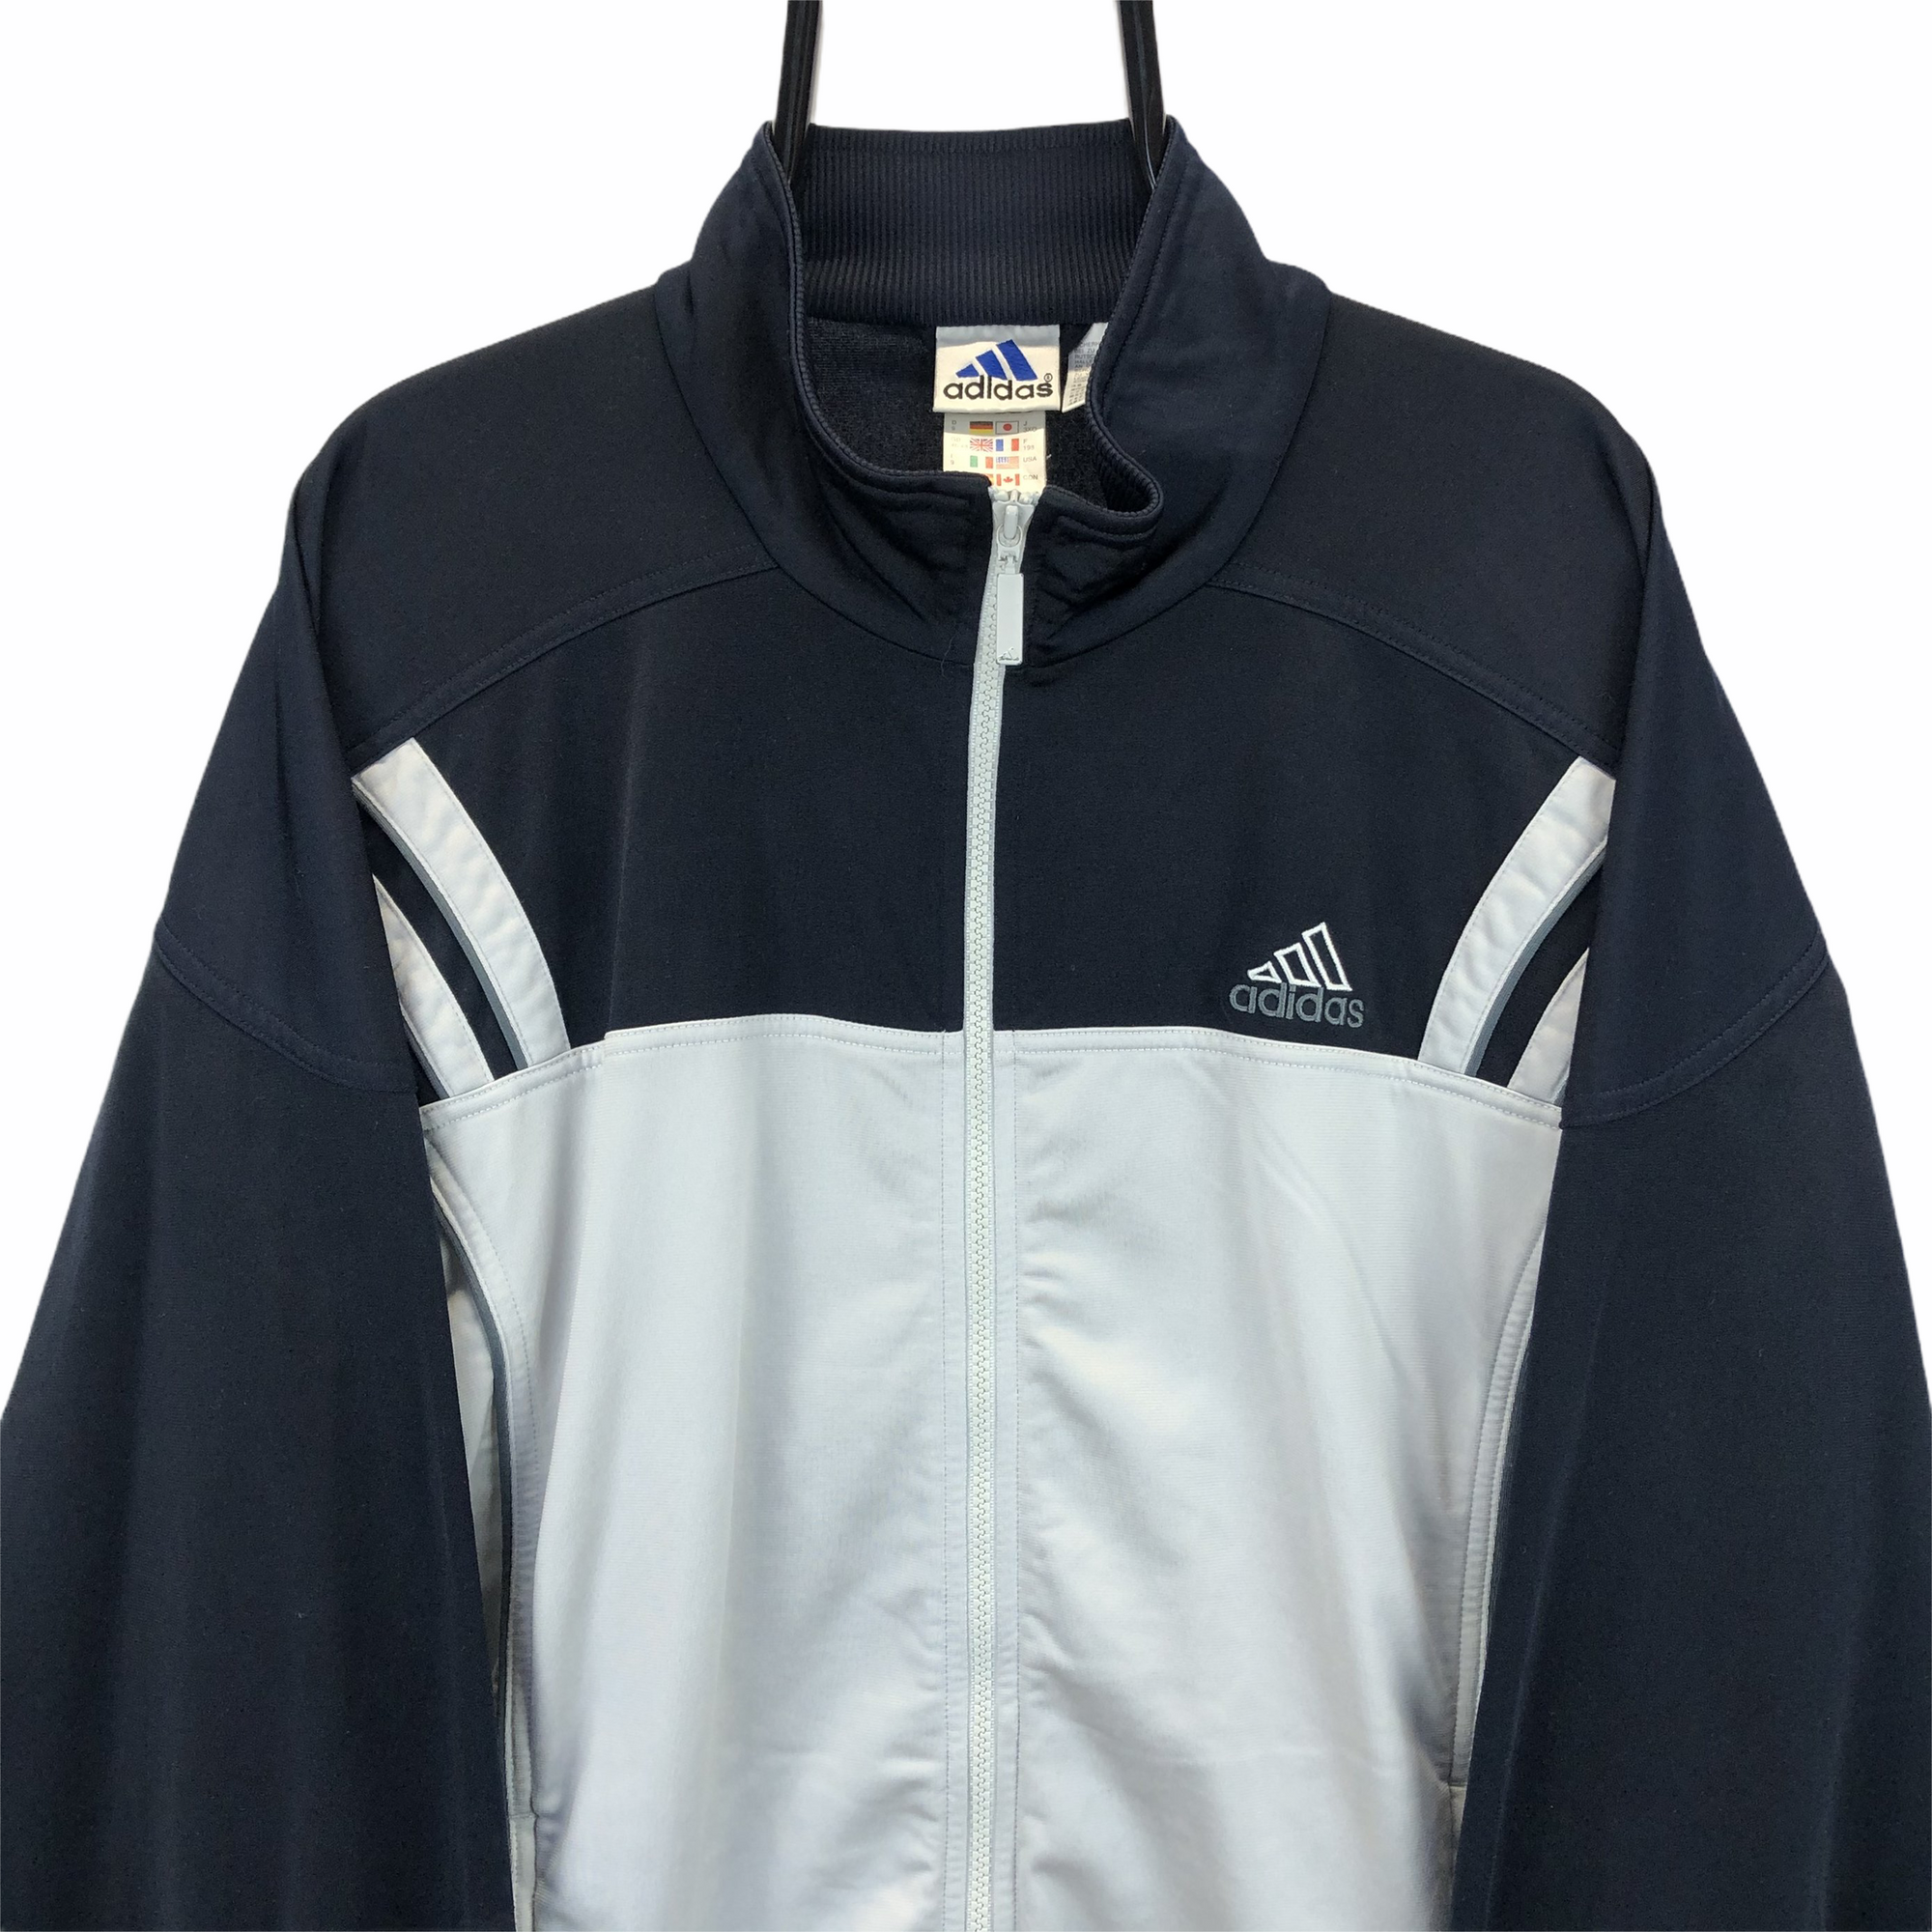 Vintage 90s Adidas Track Jacket in Navy/Silver - Men's XL/Women's XXL